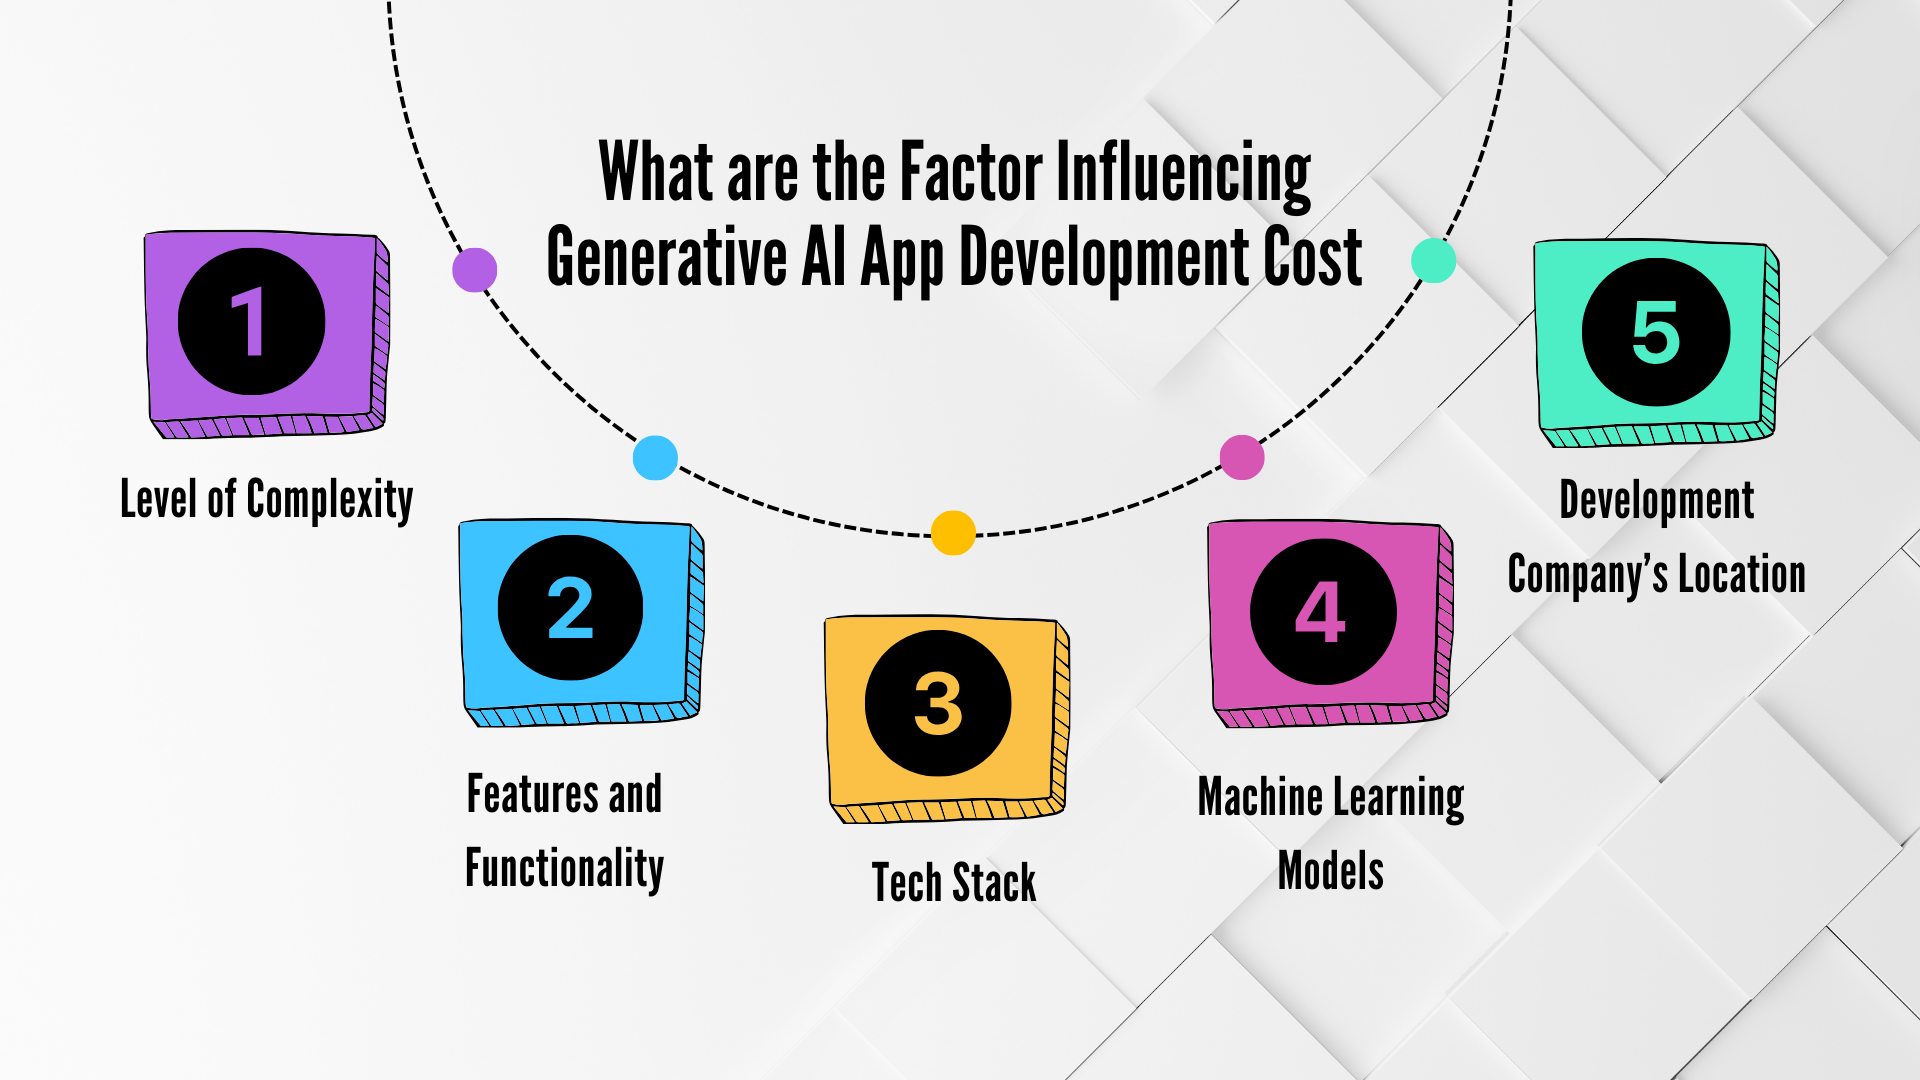 Generative AI App Development Cost